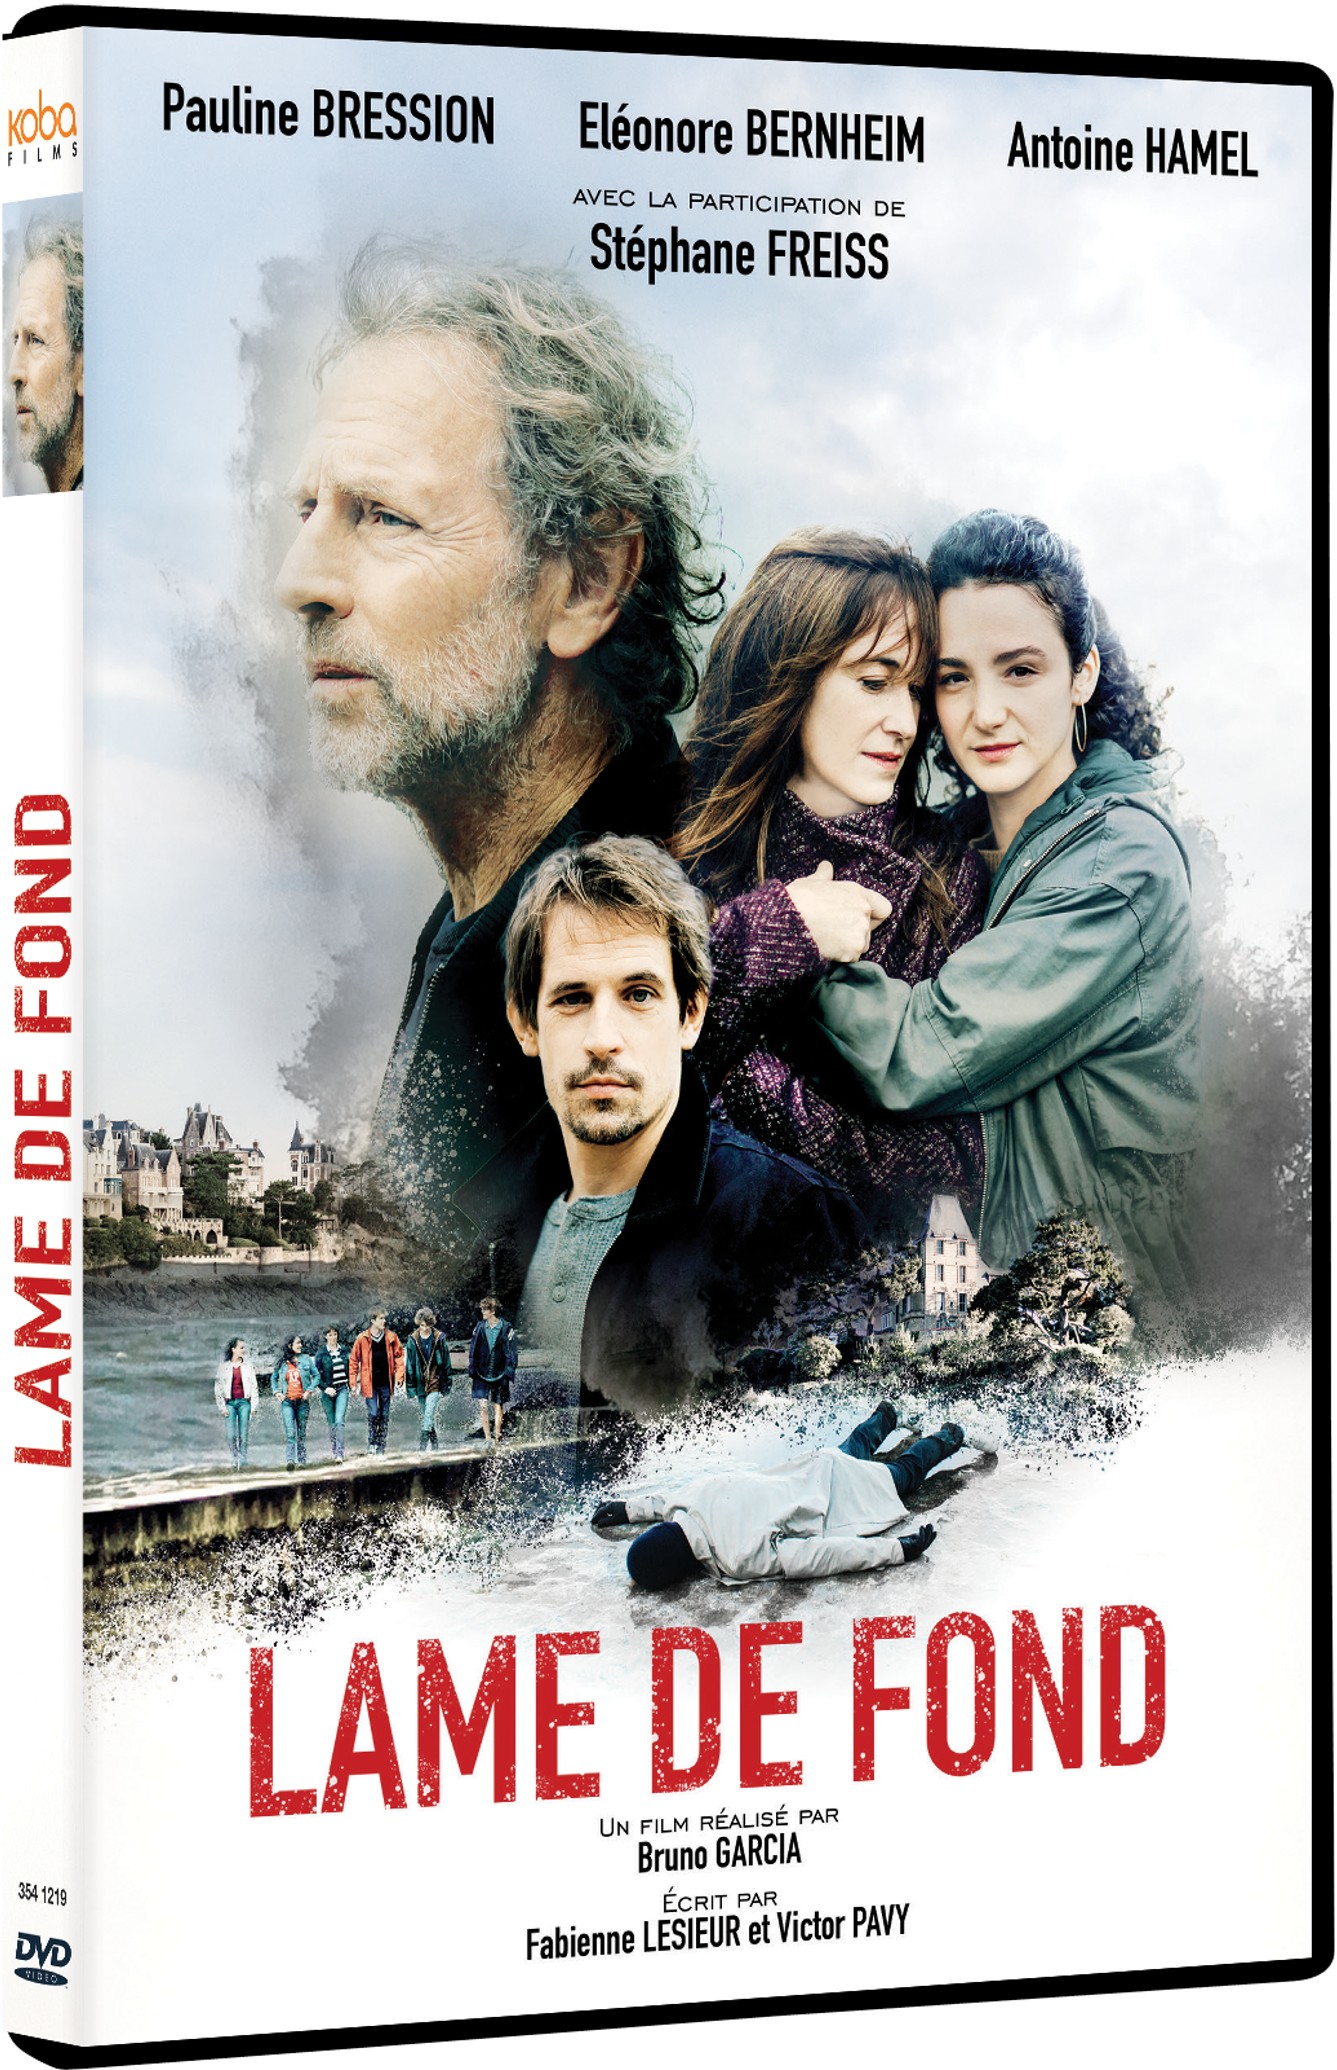 LAME DE FOND - DVD